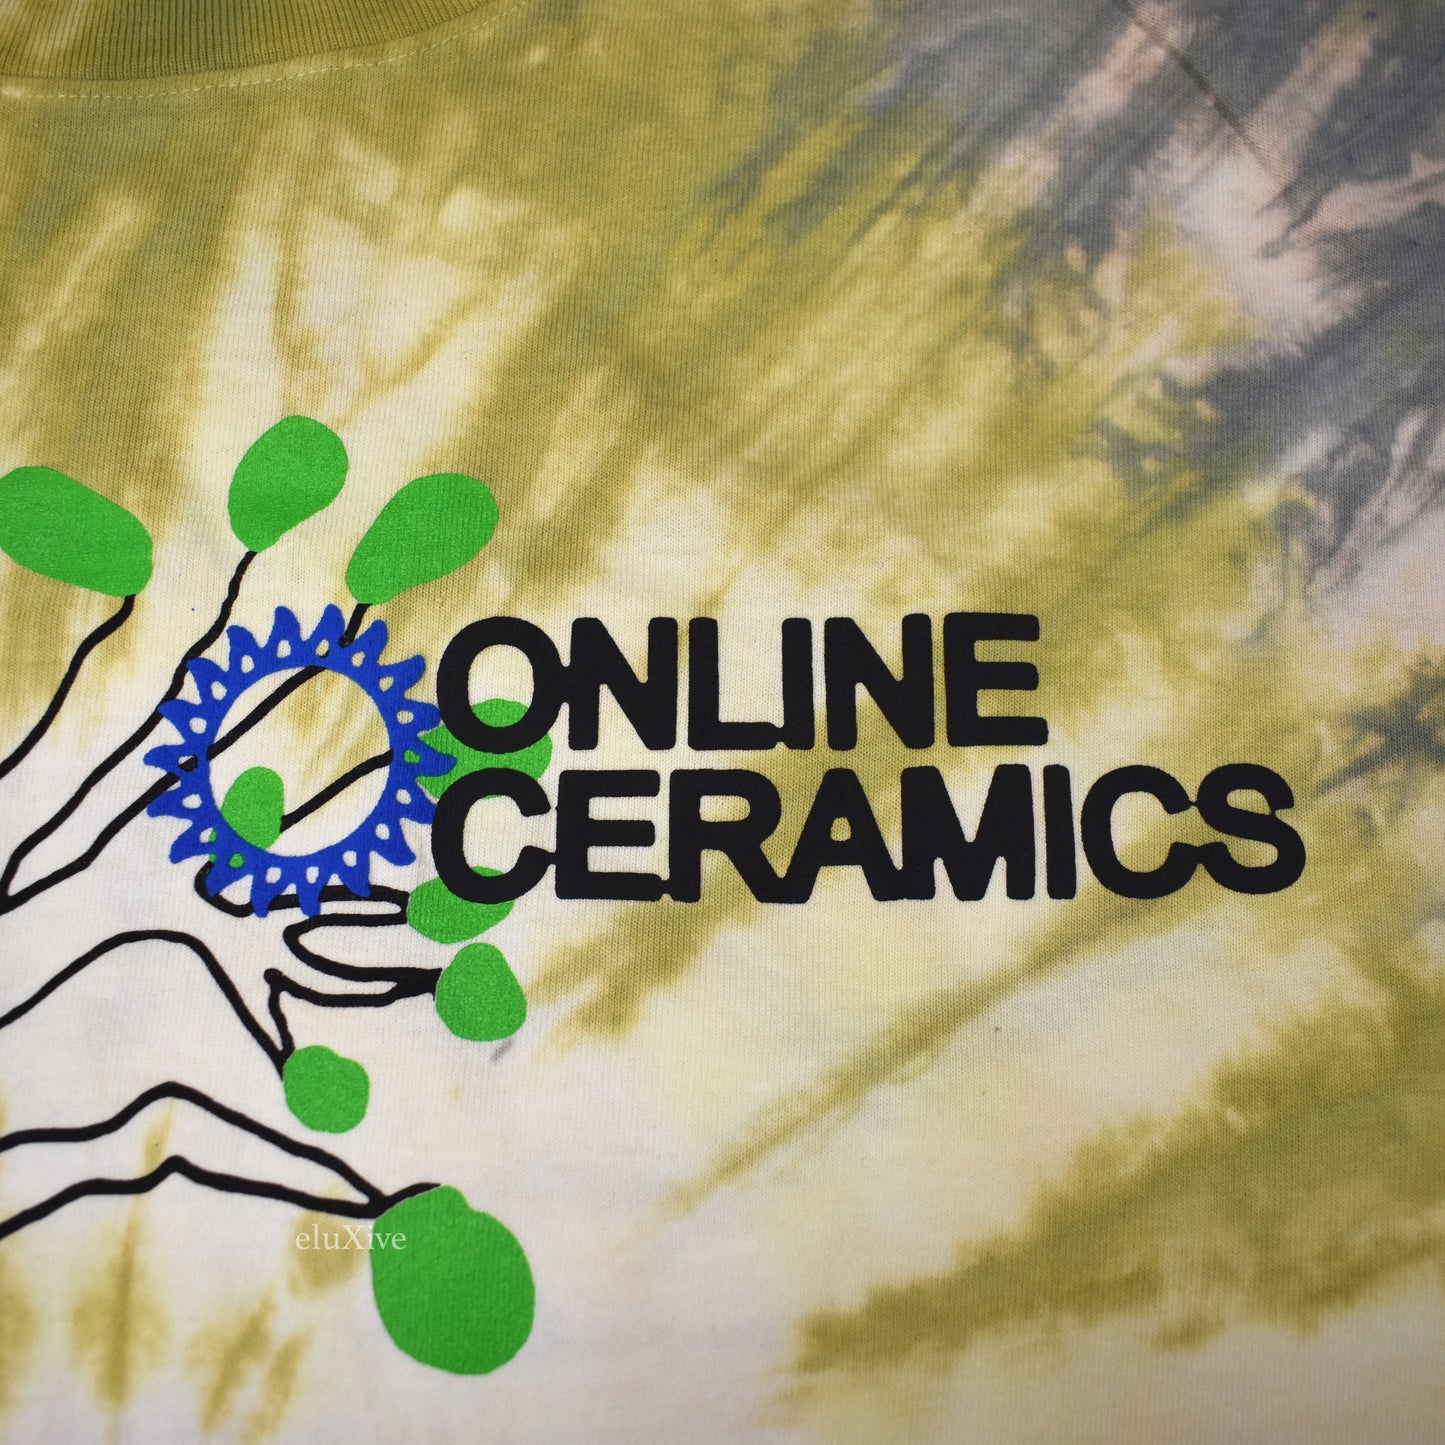 Online Ceramics - Taller Than The Trees Tie-Dye T-Shirt